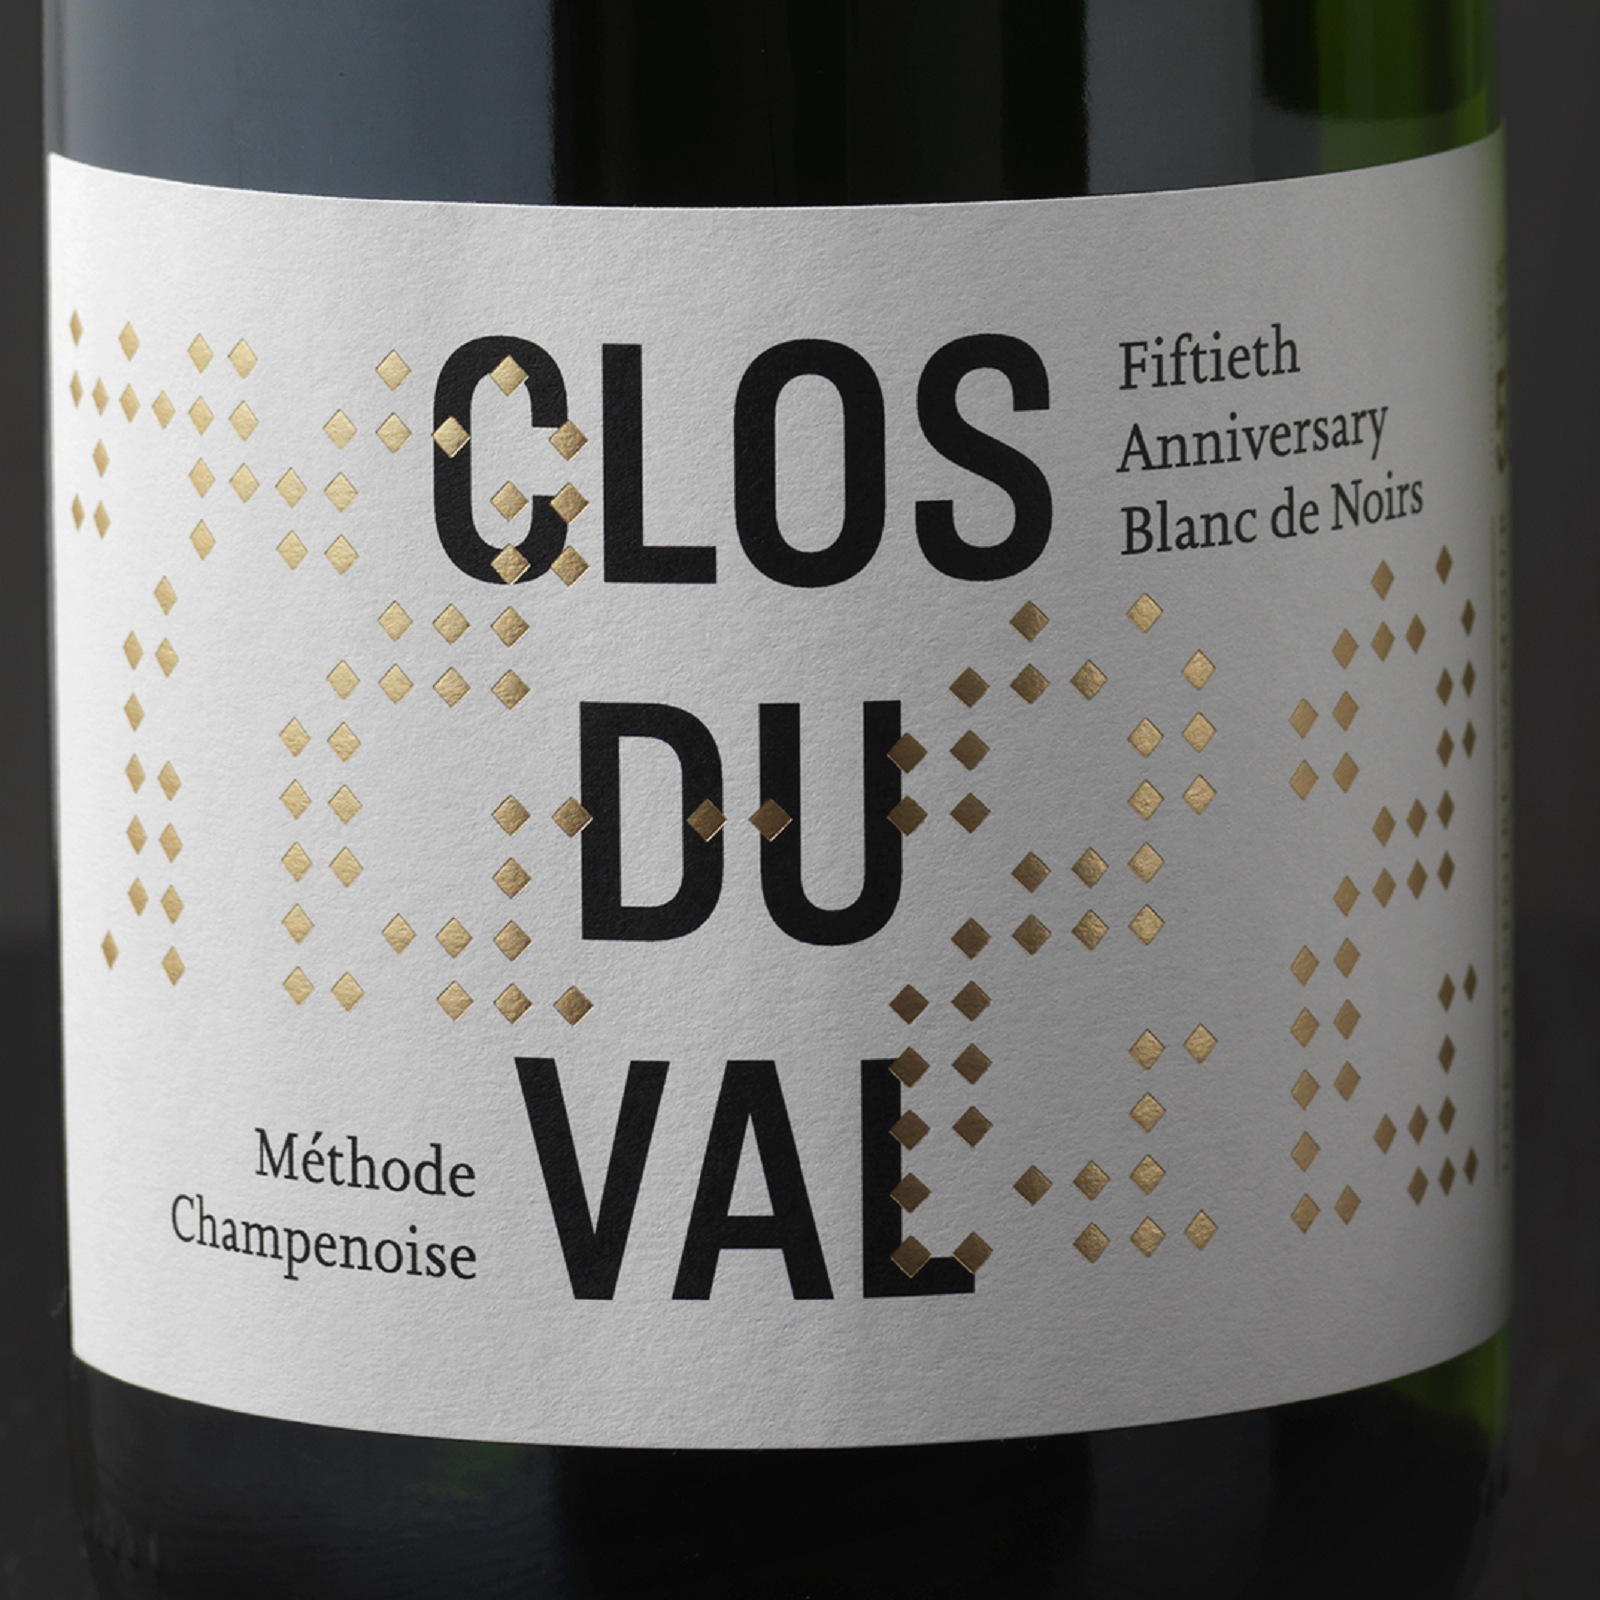 Black Chalk Still Wine Packaging Redesign by Chase Design Group - World  Brand Design Society